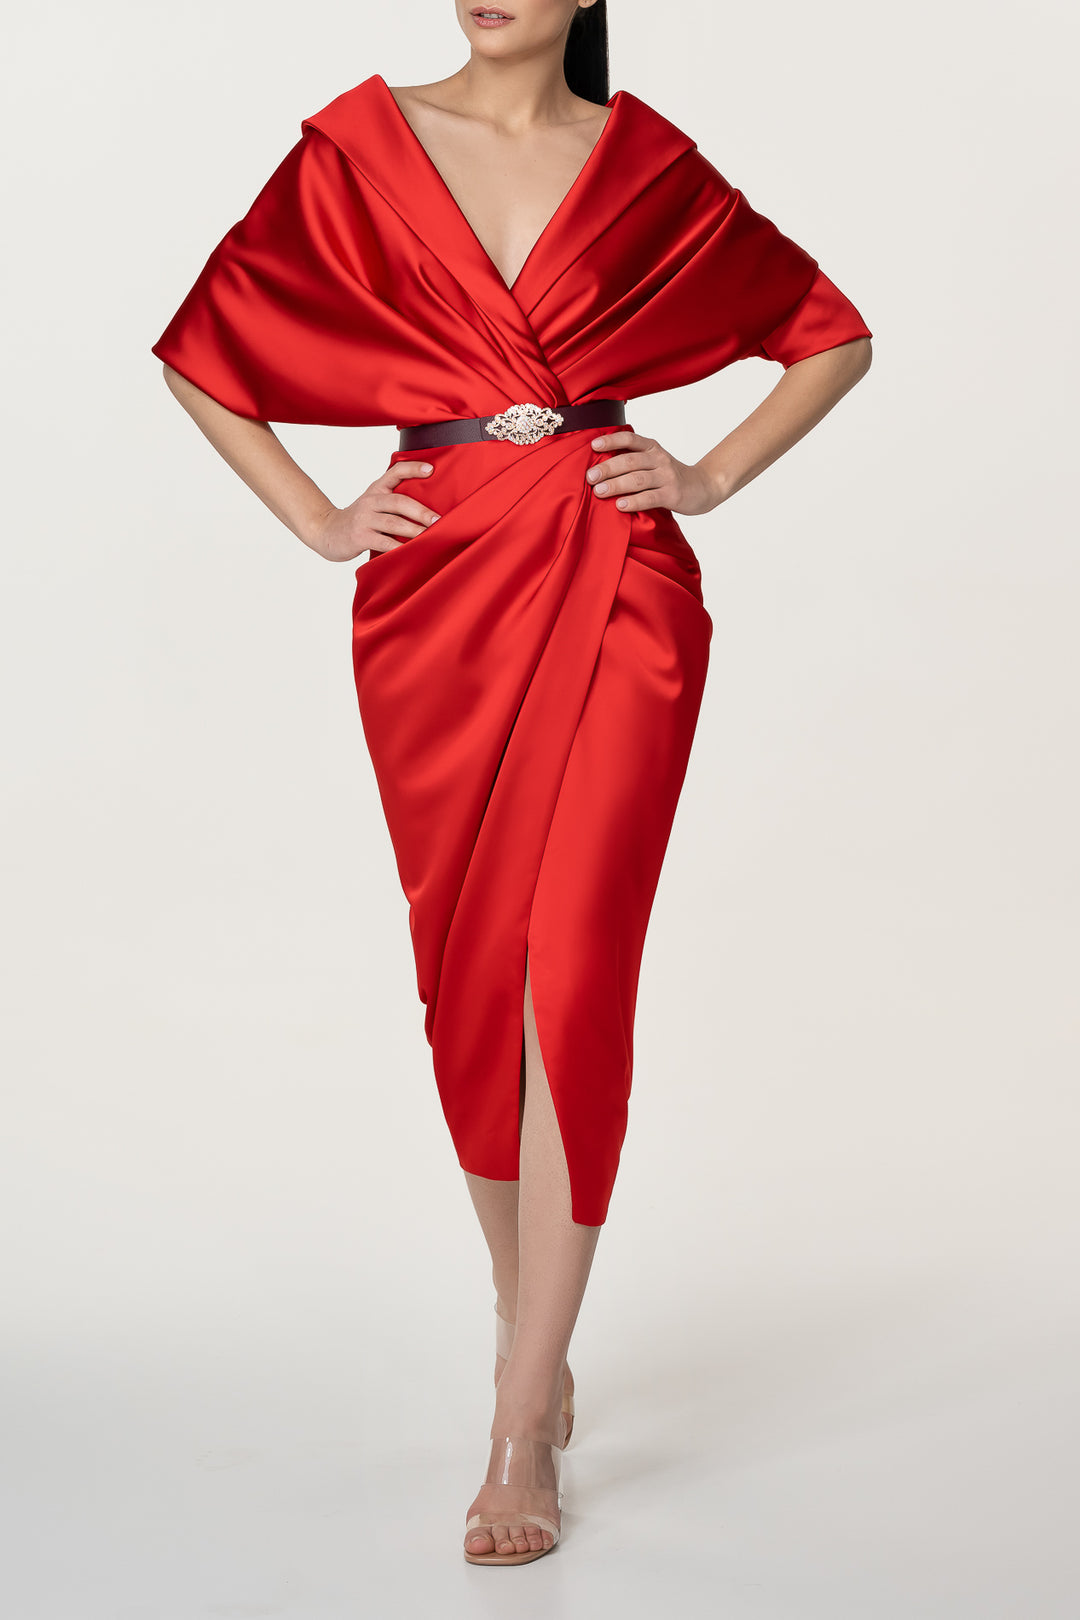 Angelina Midi Hot Red Satin Dress